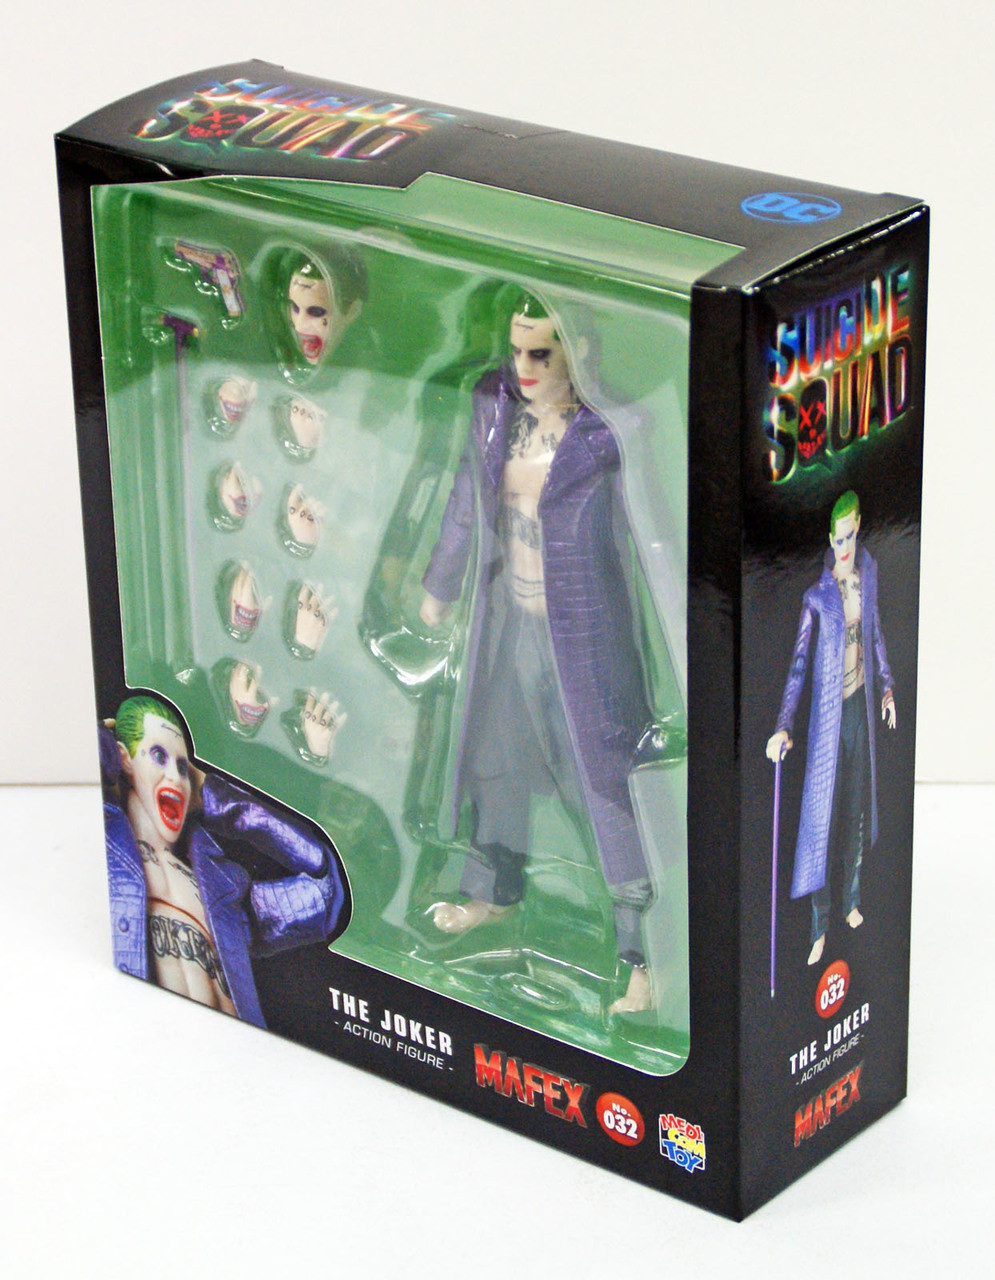 Medicom Suicide Squad The Joker No. 032 Action Figure - US